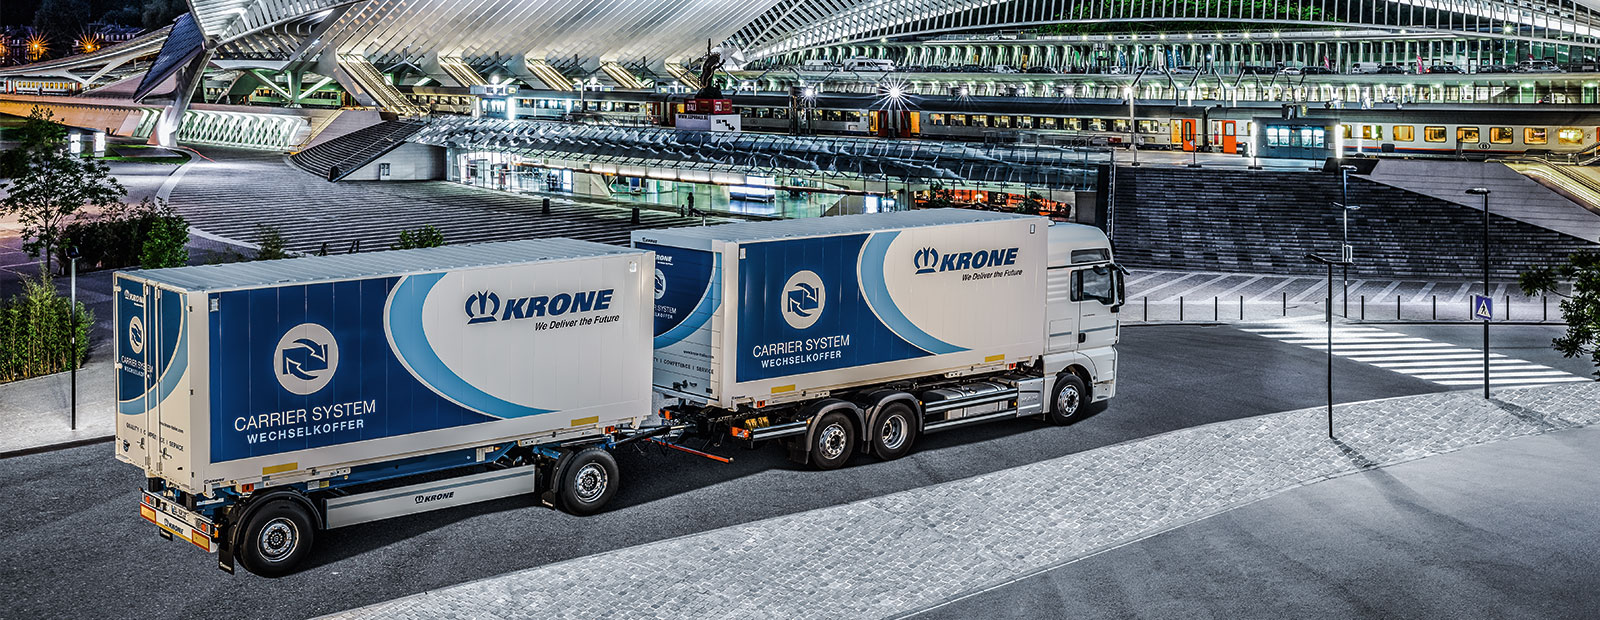 Krone Carrier-system